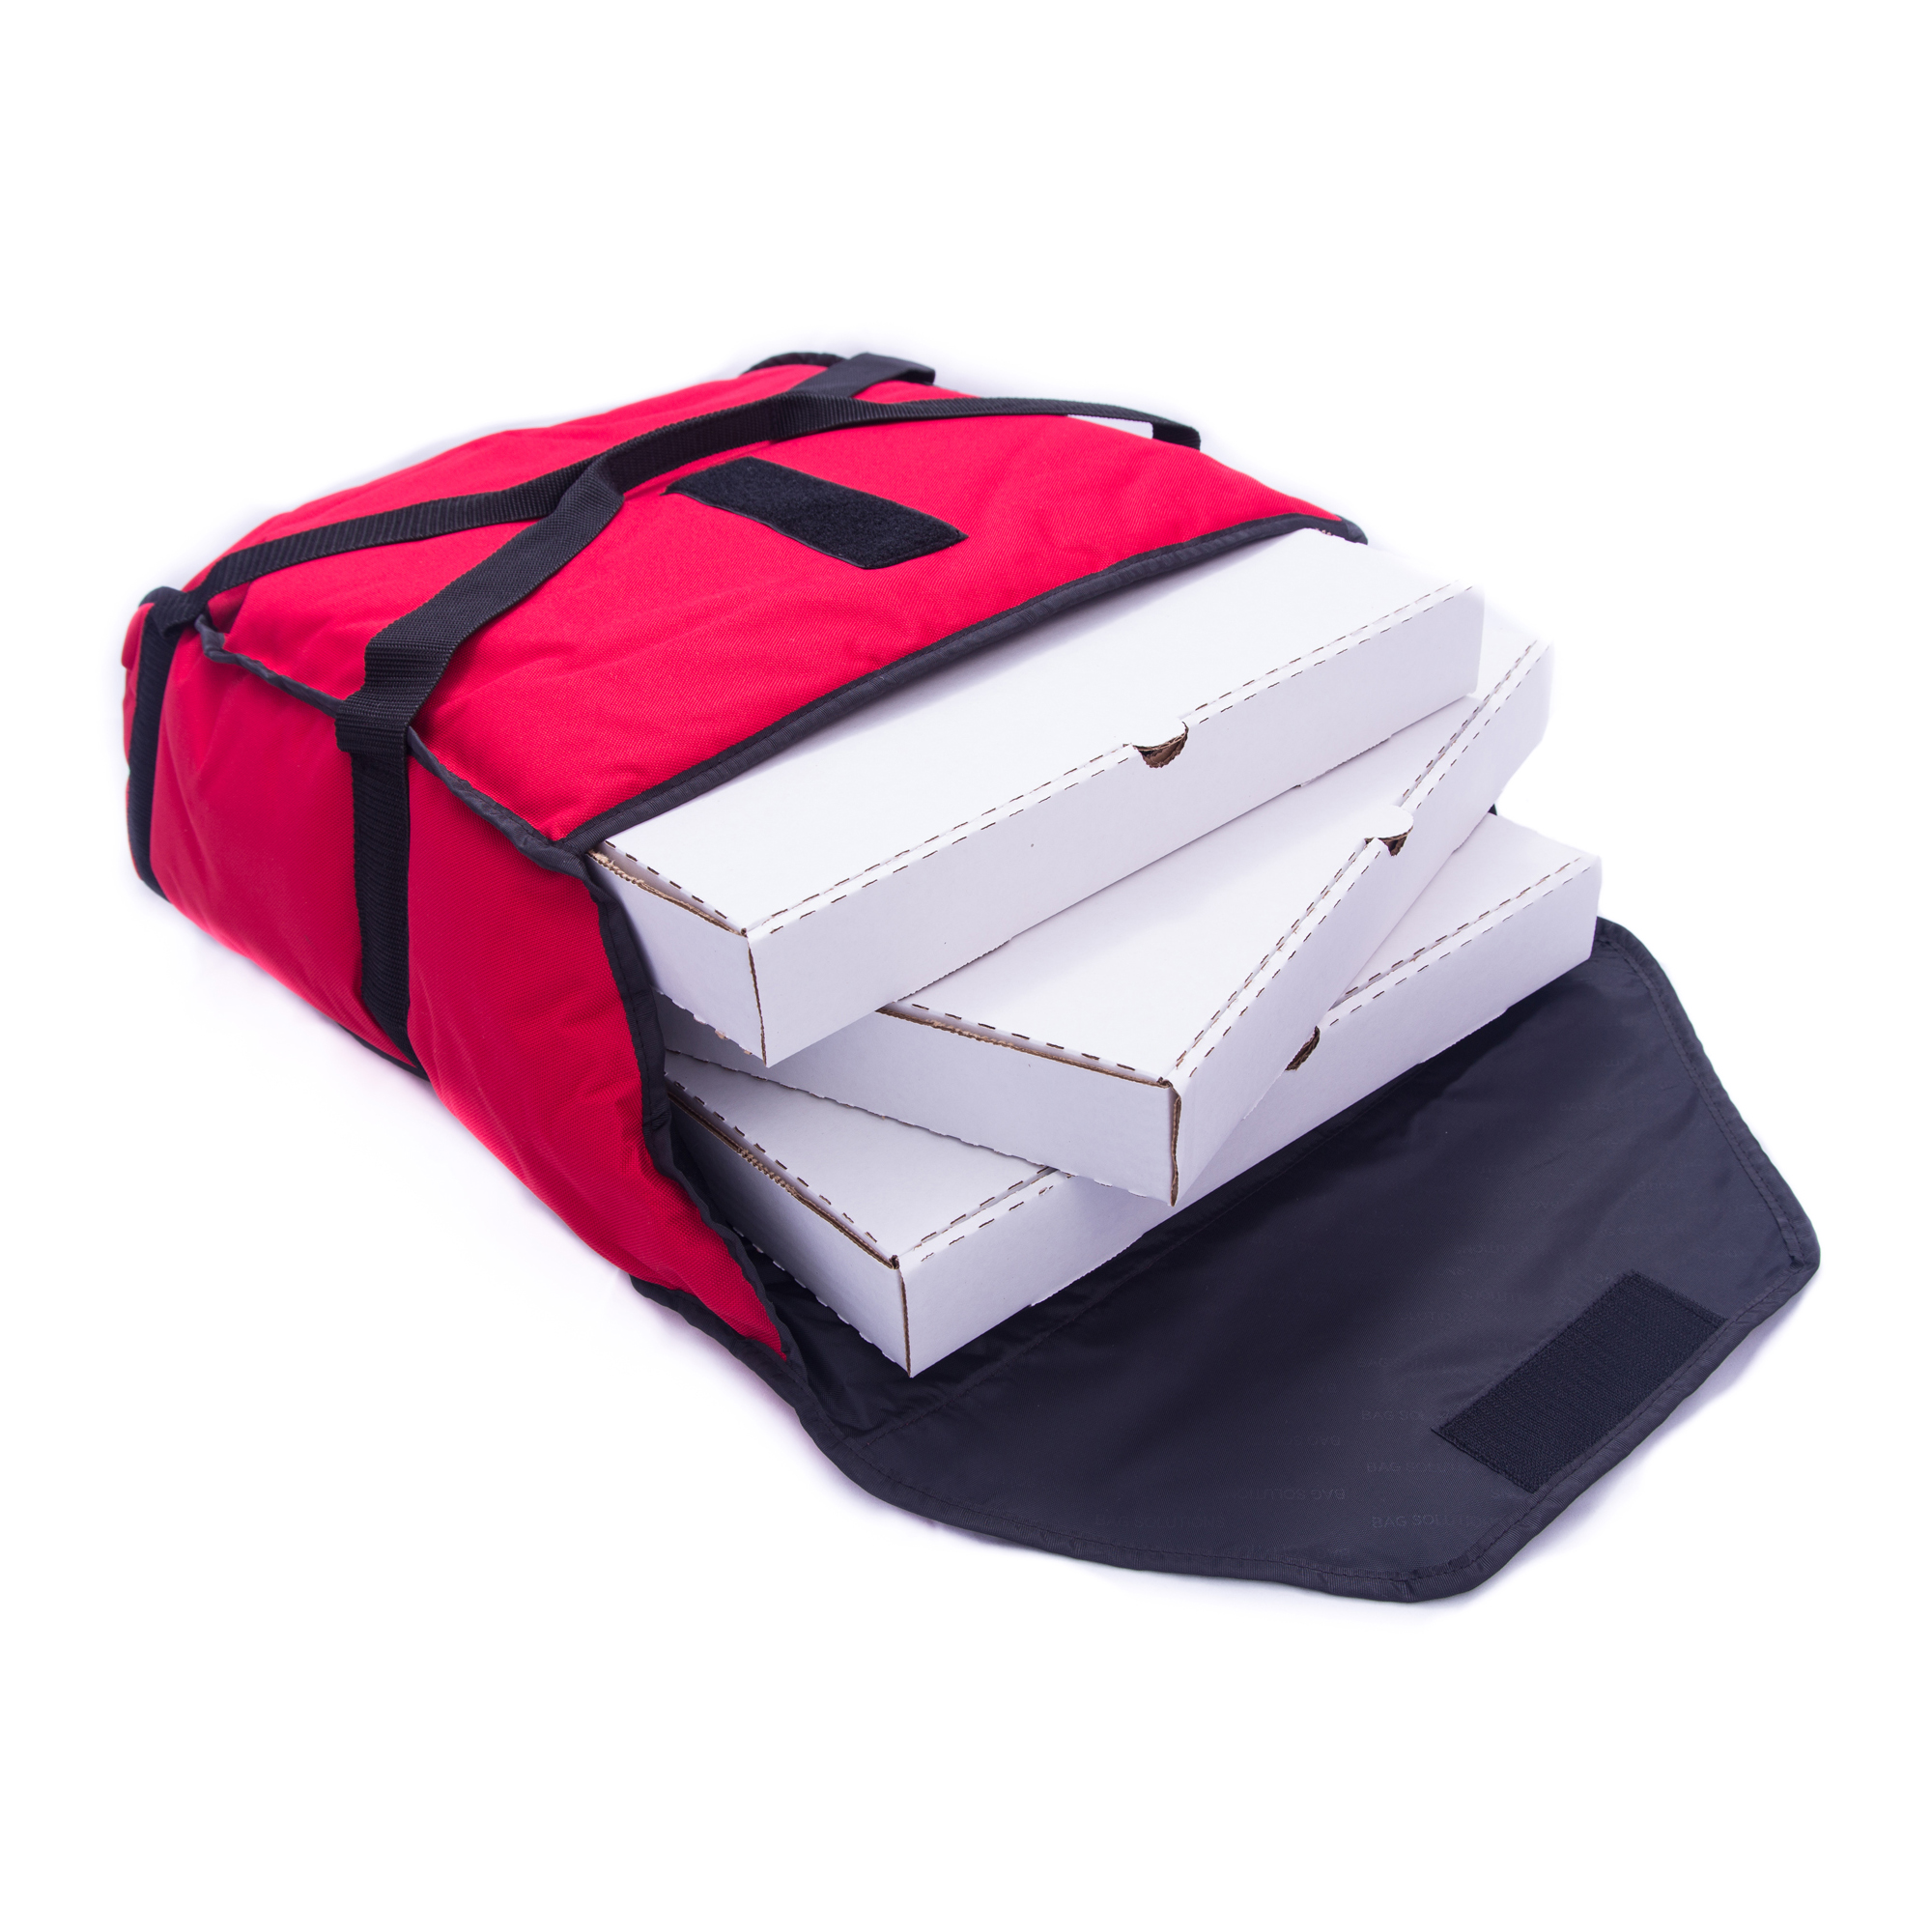 Specialized Pizza Bag - Sport Systems Albuquerque, NM | 505-837-9400